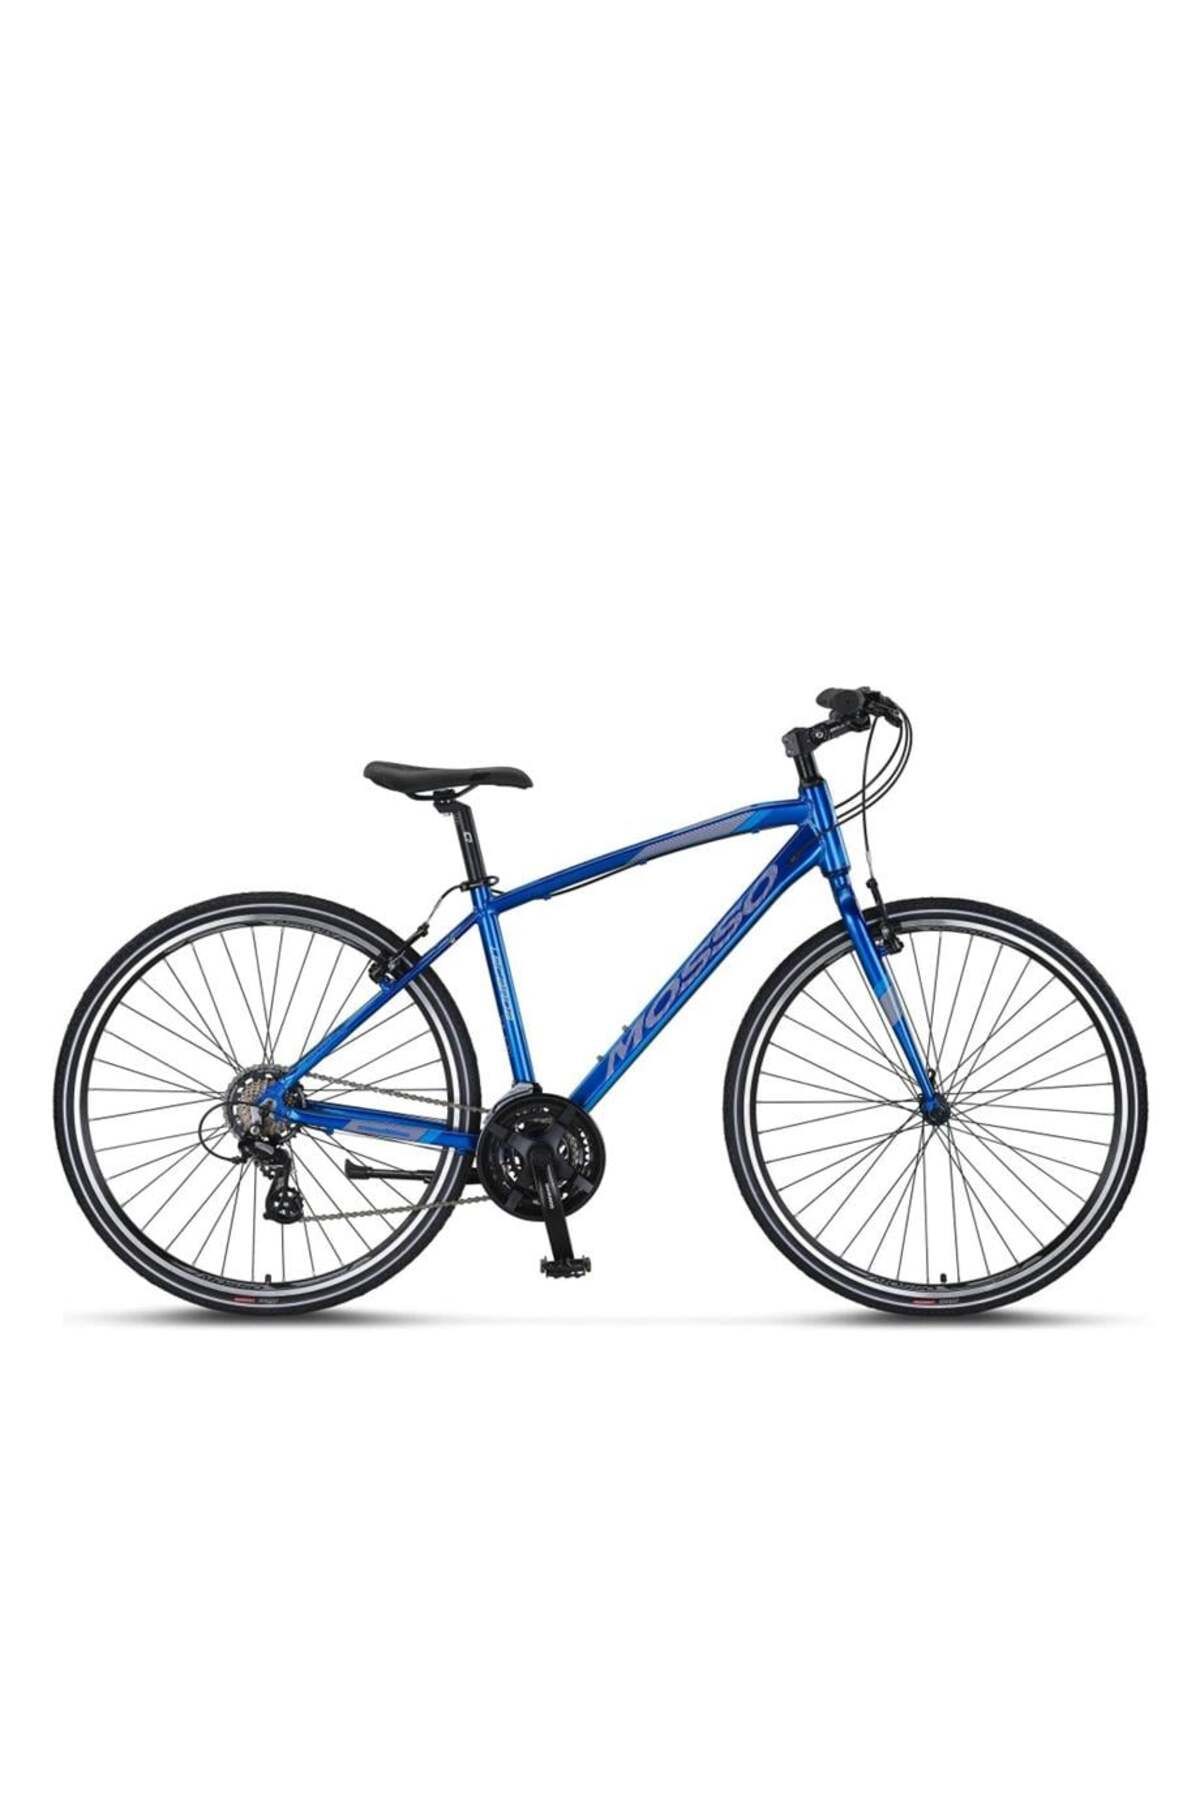 Mosso Legarda-2221-mdm-v Erkek Şehir Bisikleti 560h 28 Jant 21 Vites Lacivert Mavi